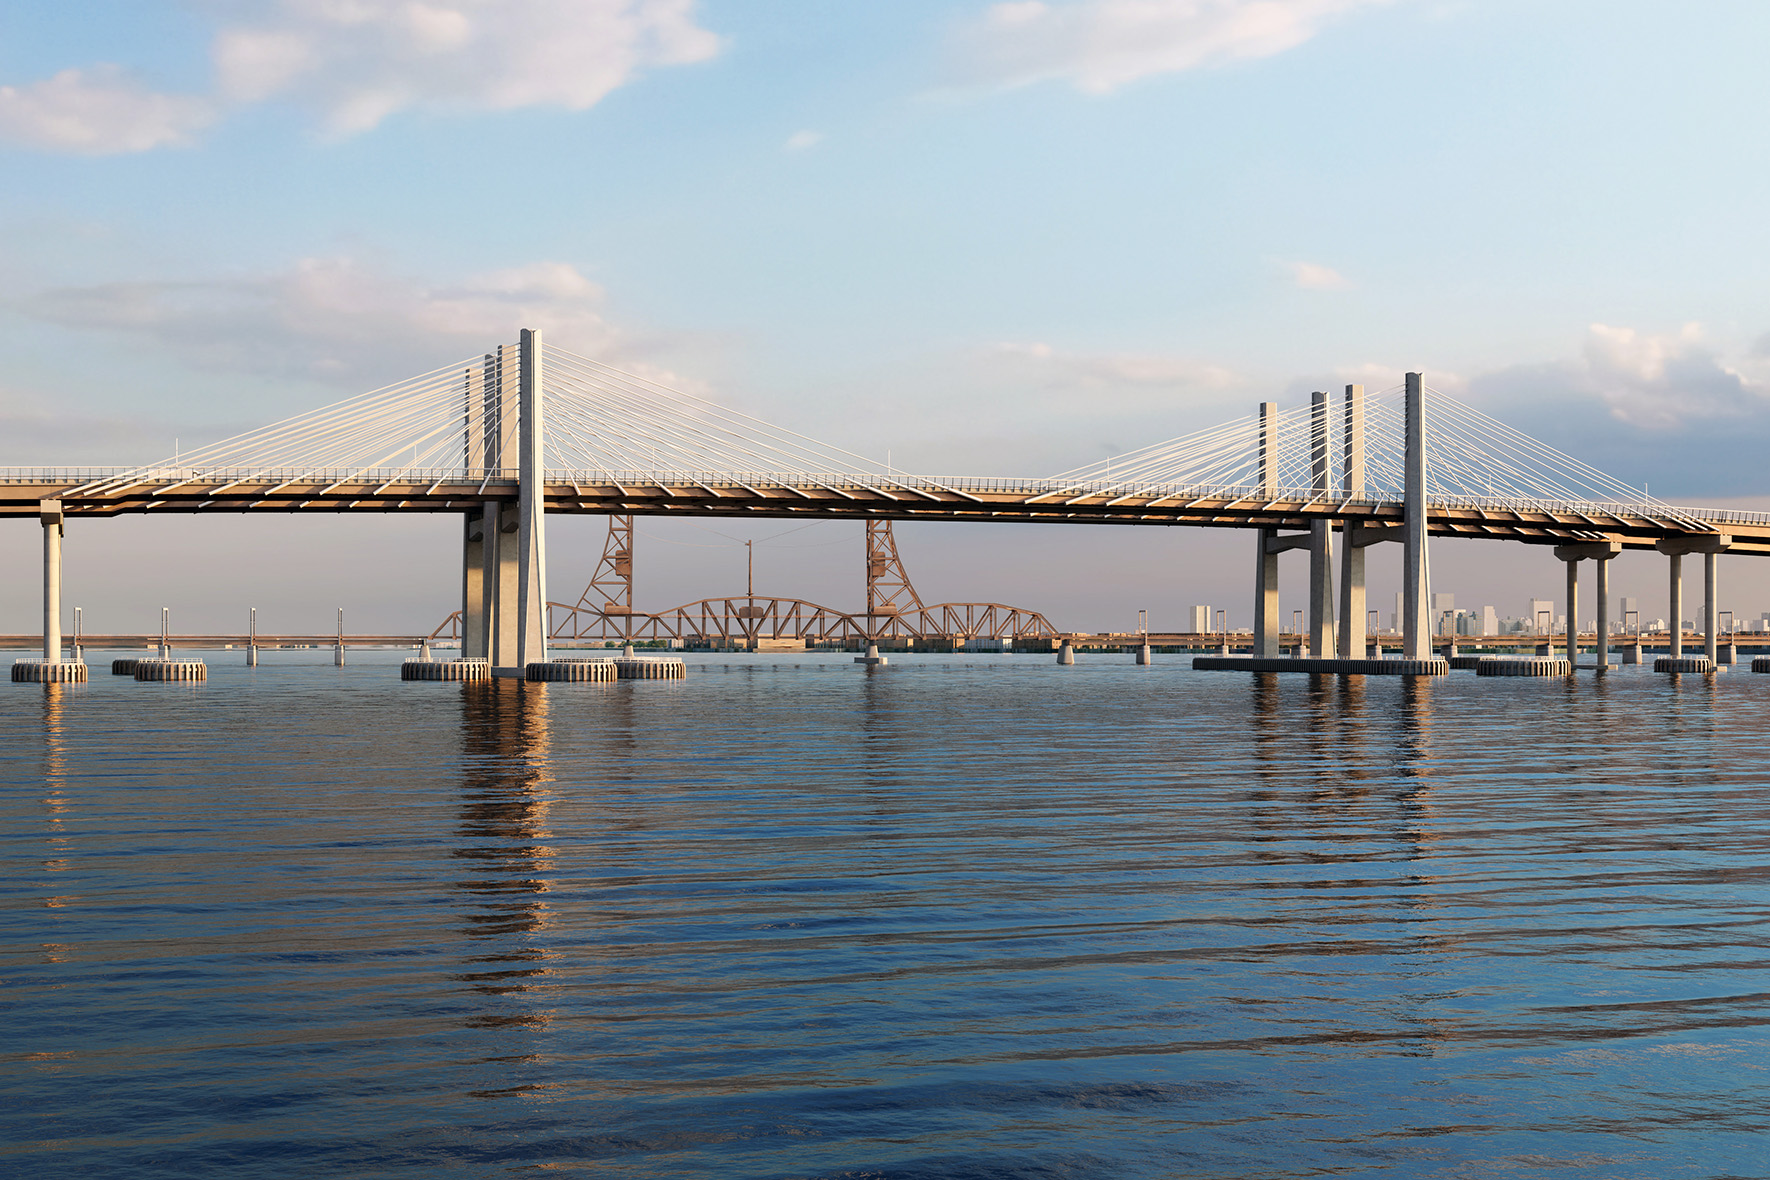 Newark Bay Bridge Replacement